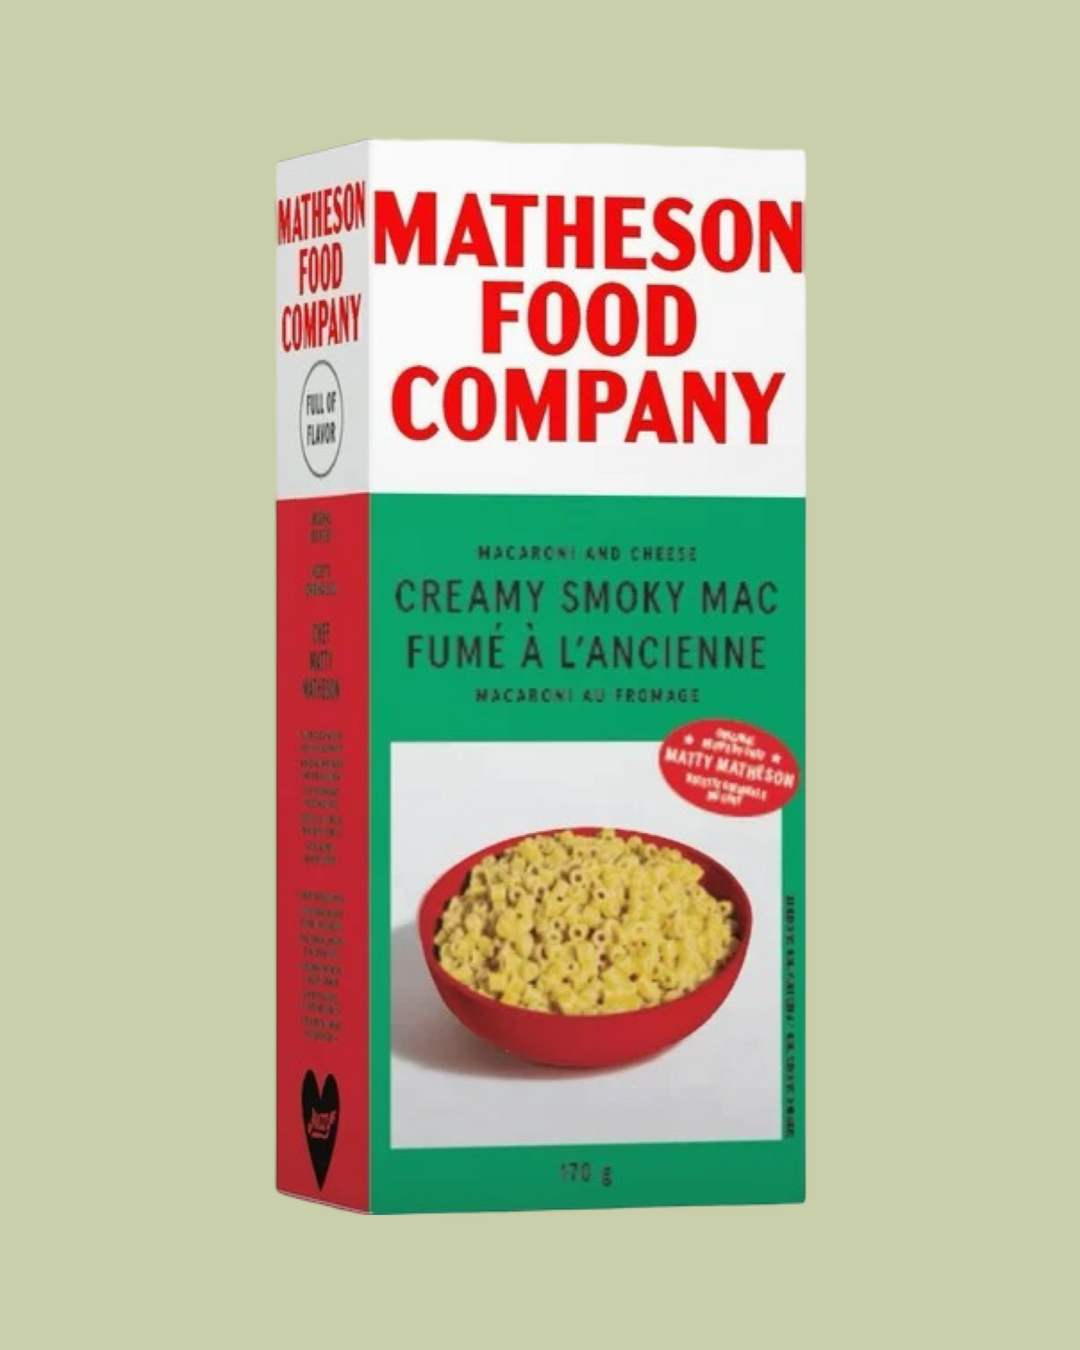 Matheson Macaroni and Cheese Creamy Smoky